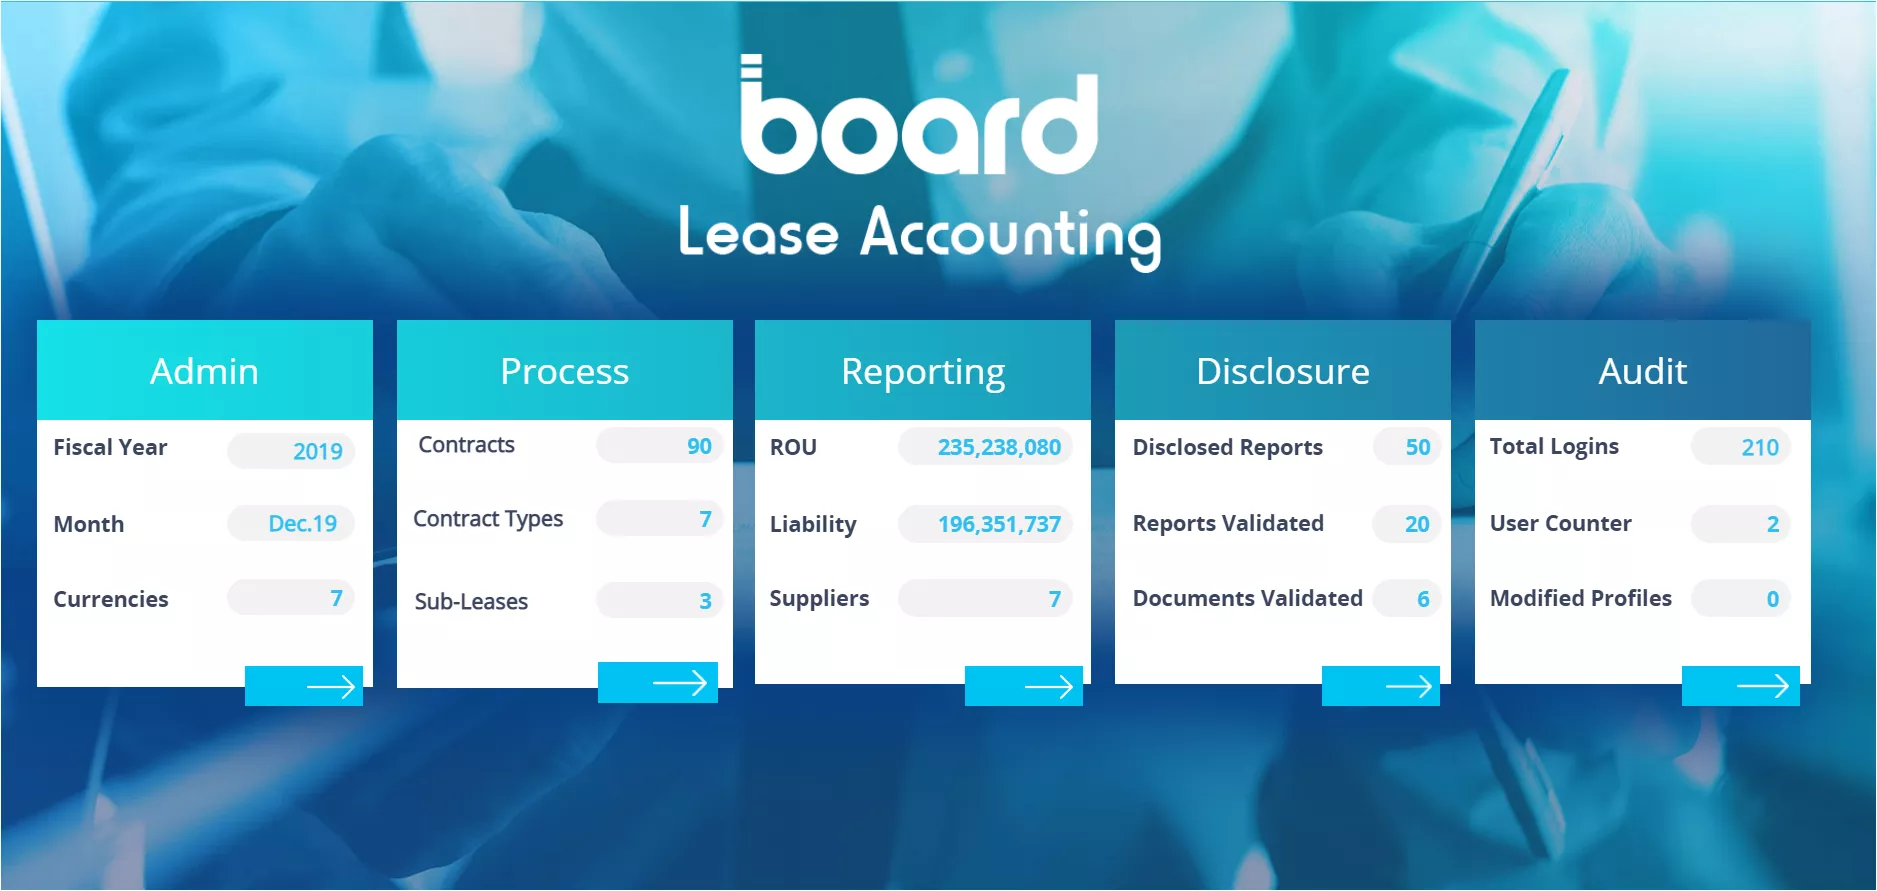 Board Lease Accounting